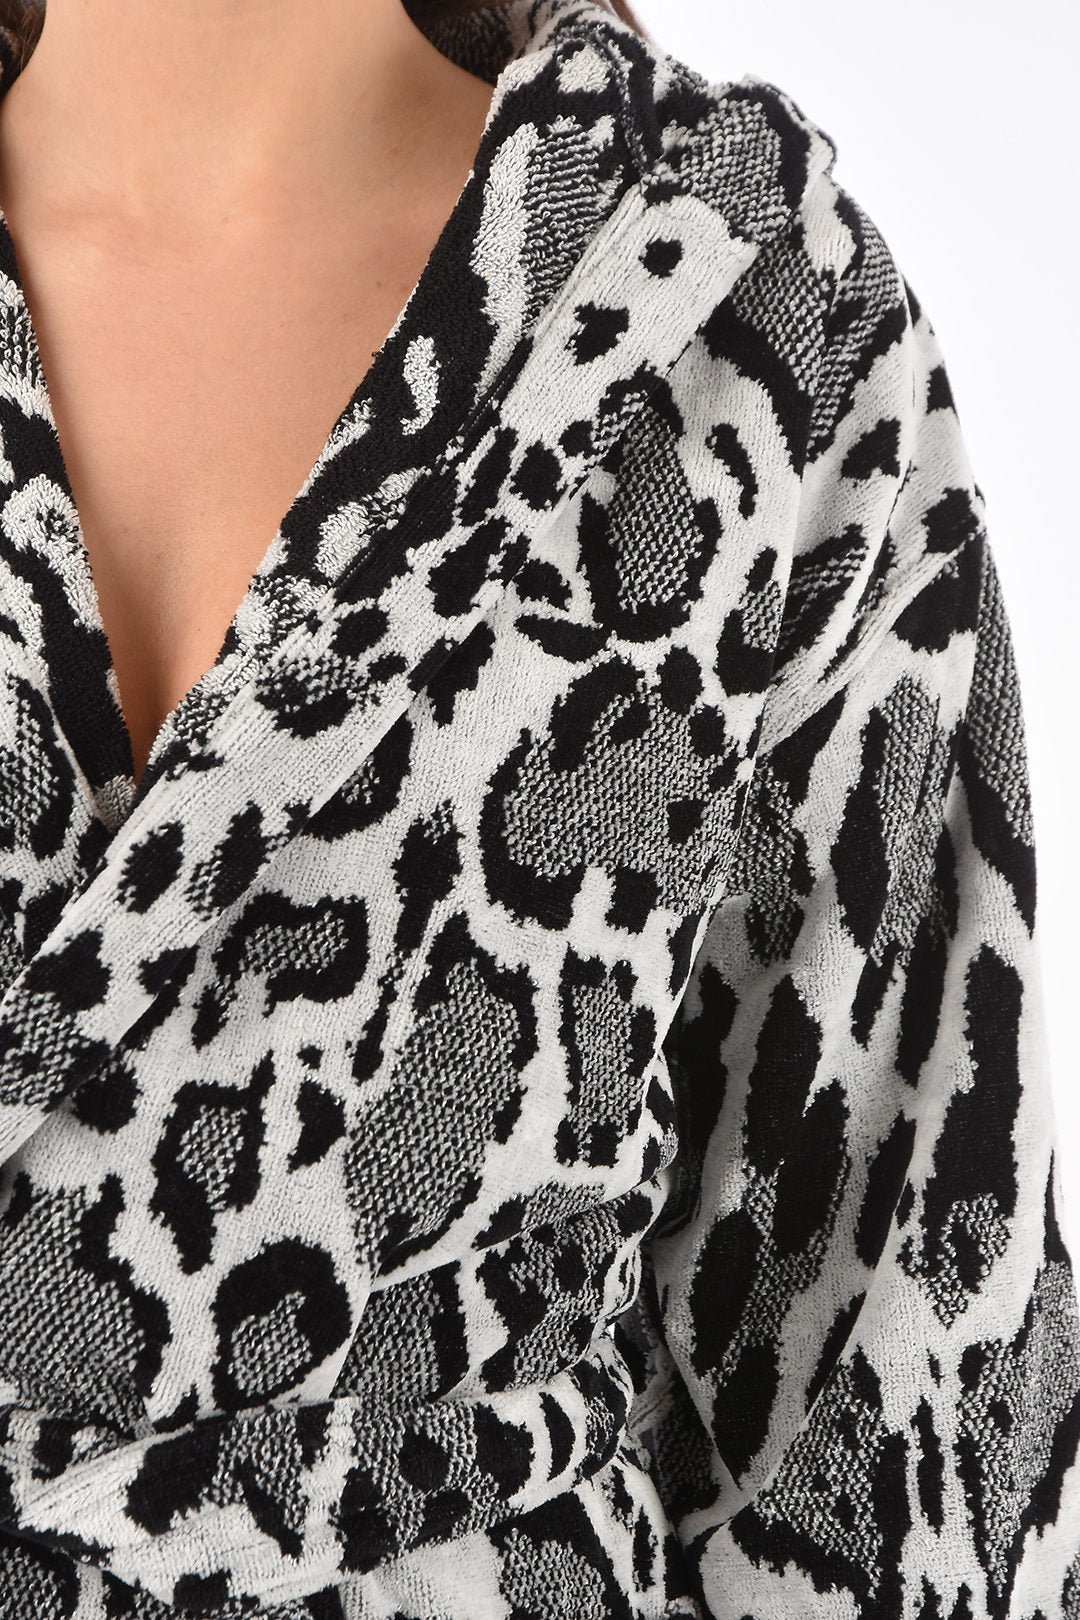 Home animal print bathrobe with hood black and white